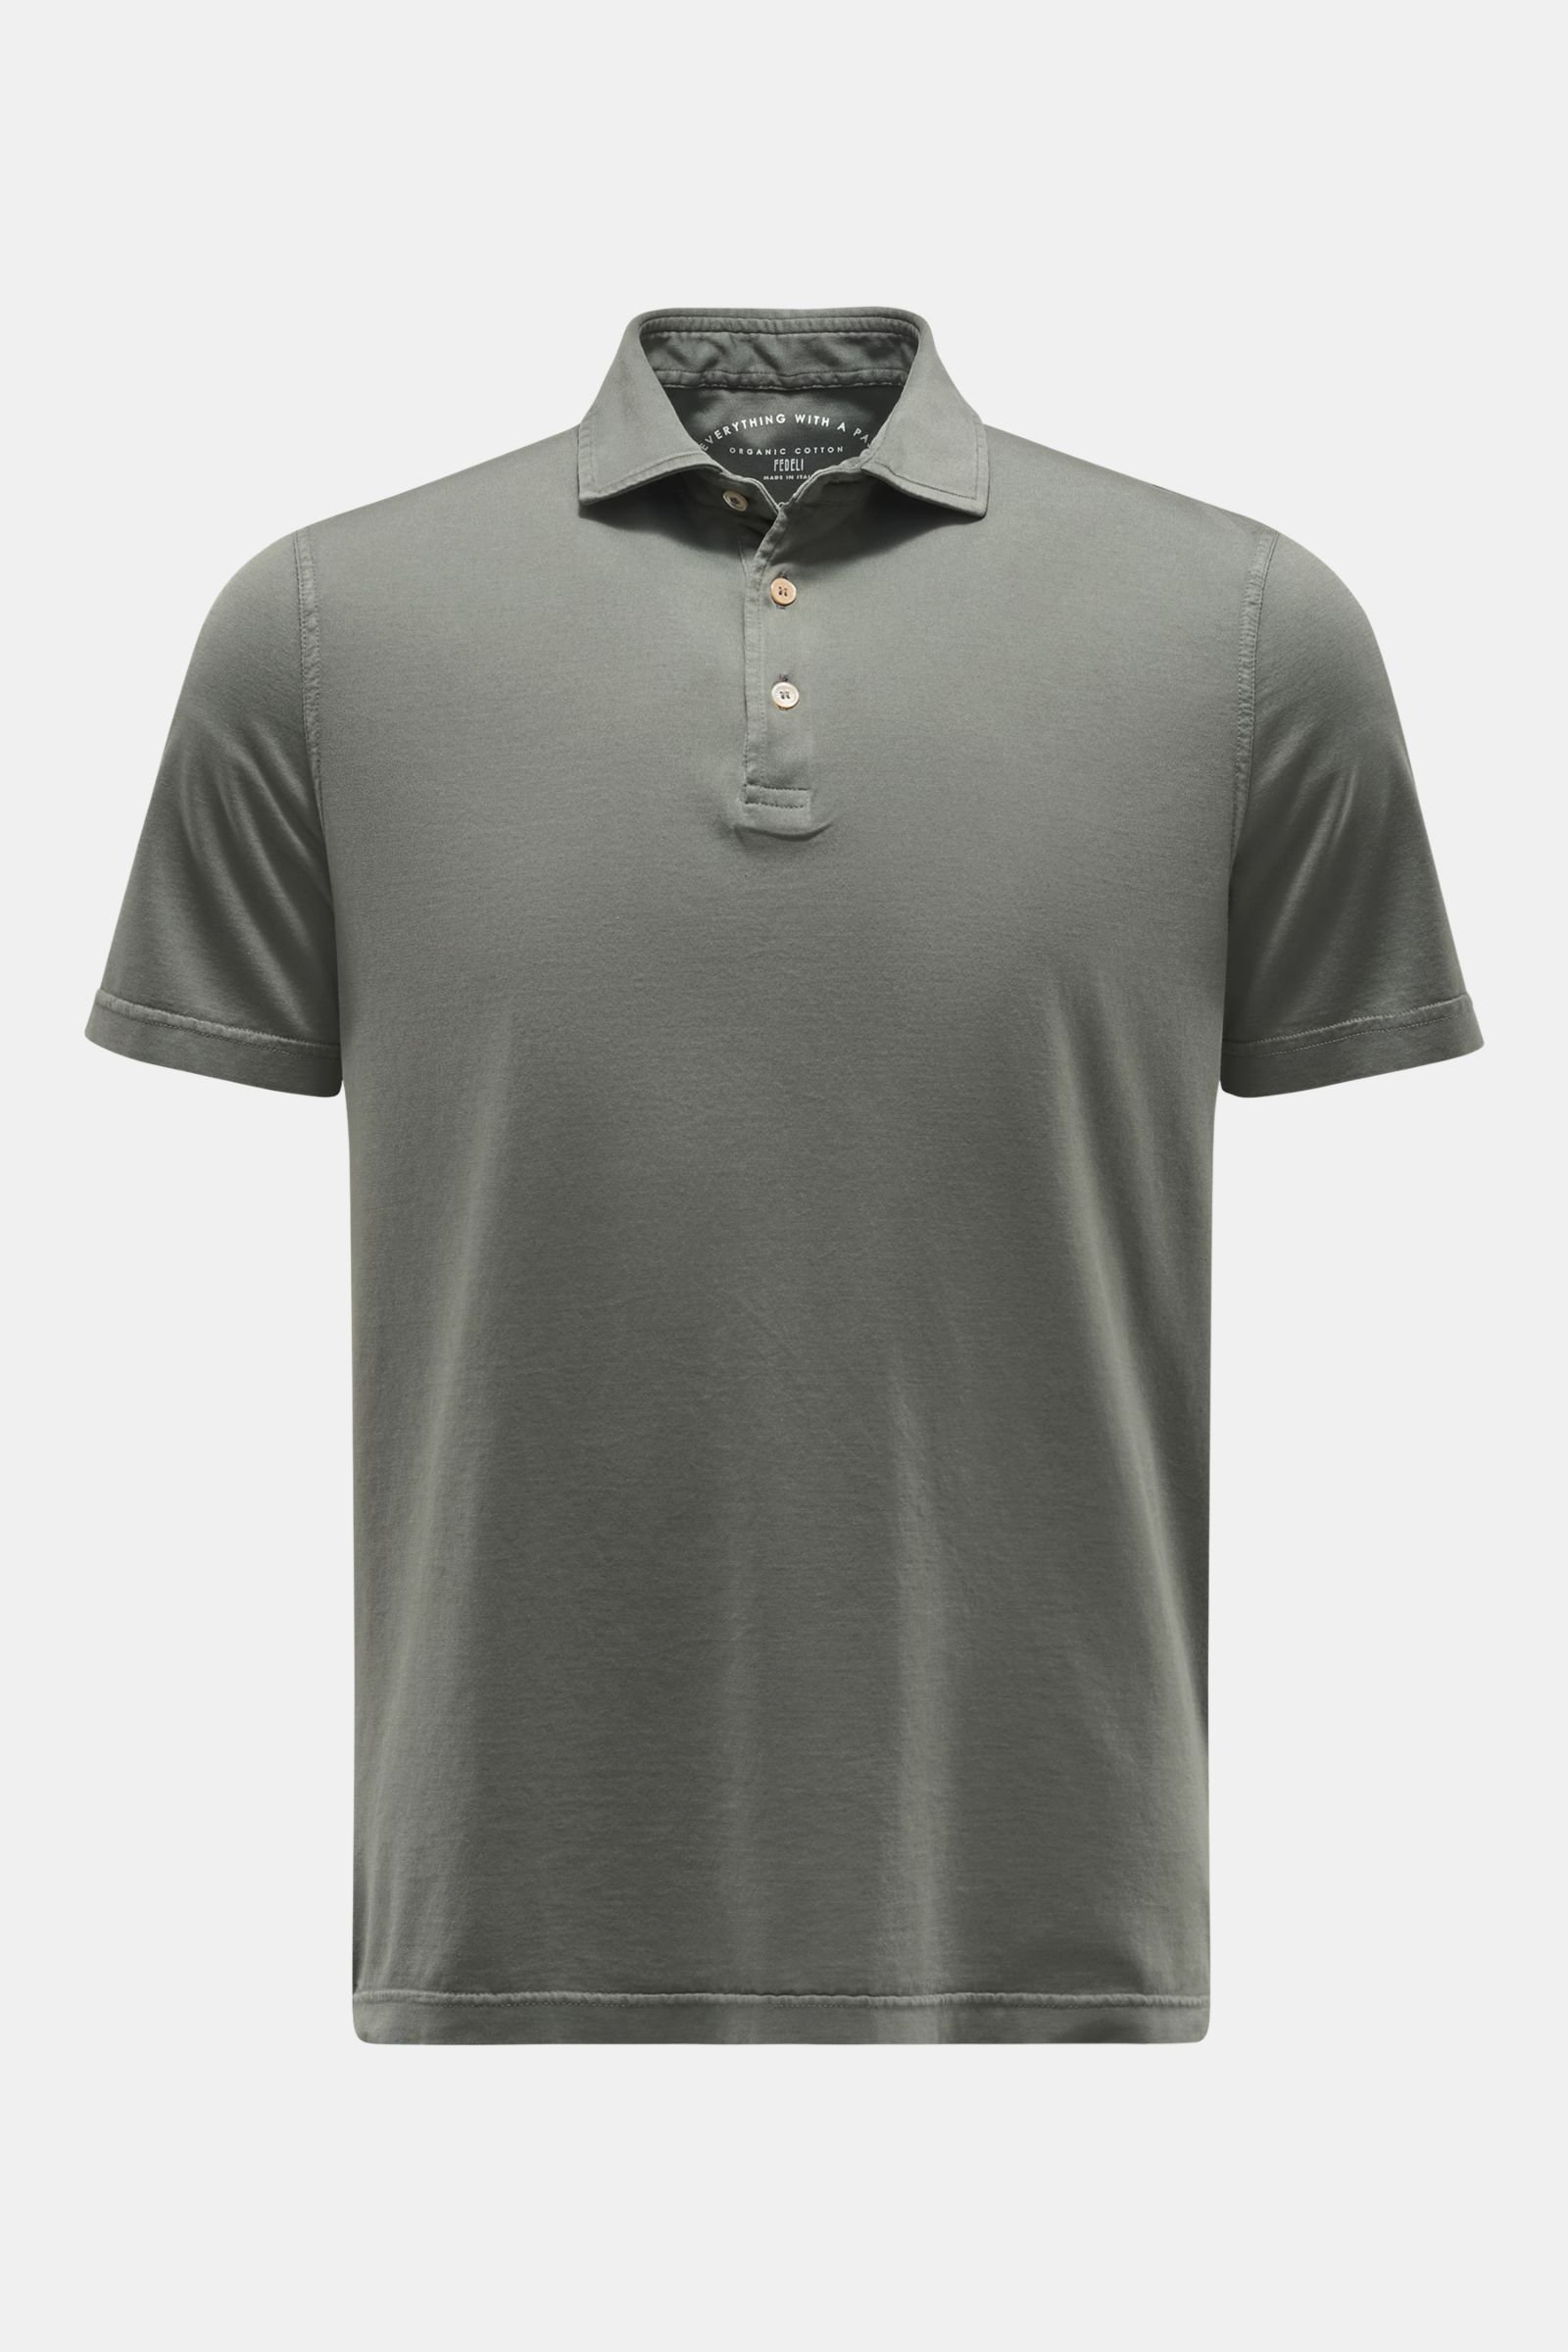 Jersey-Poloshirt 'Zero' graugrün